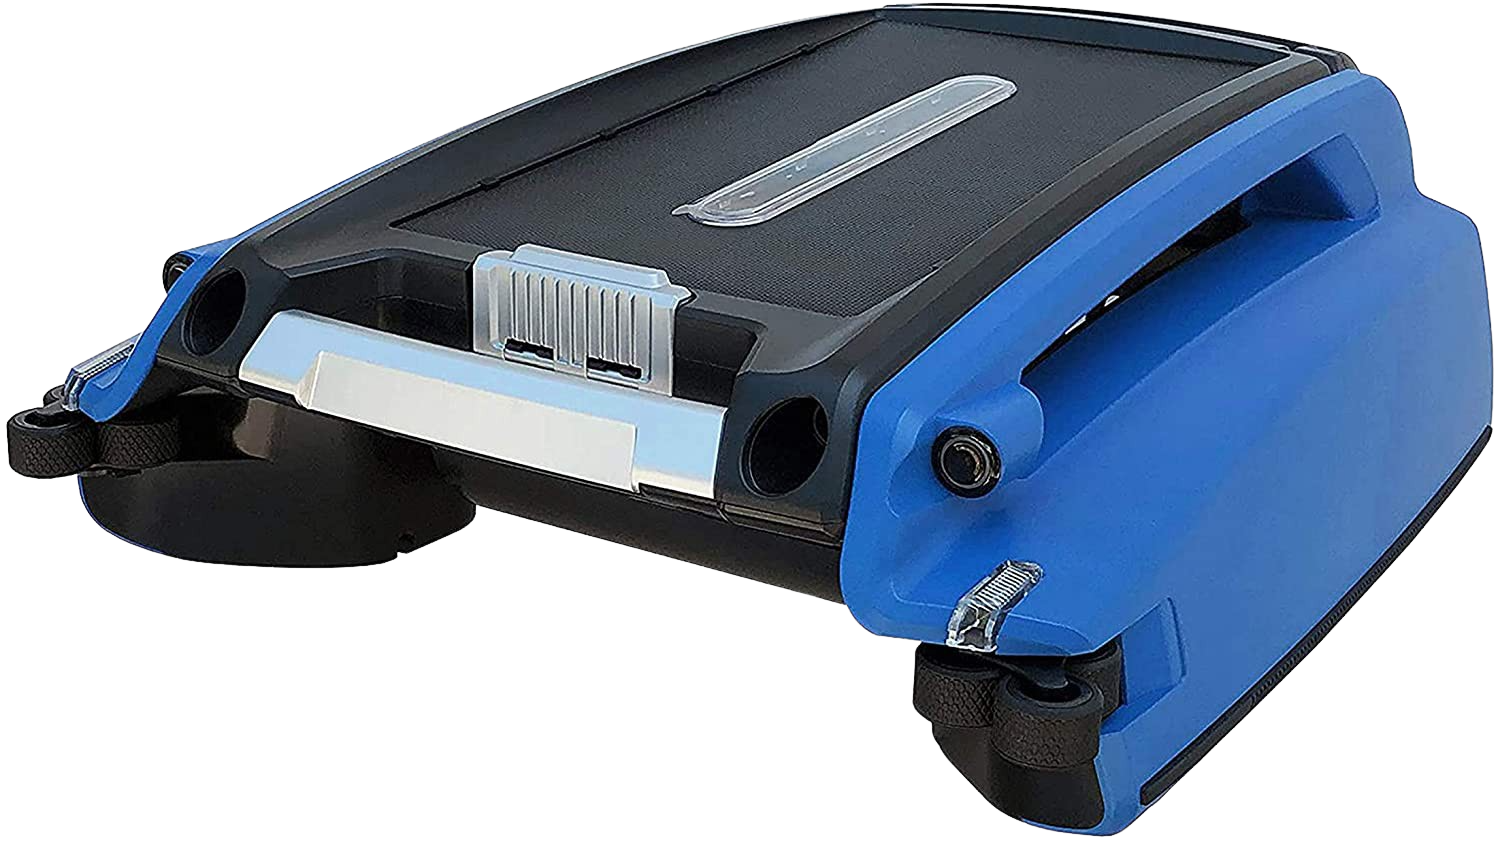 Instapark, Instapark Betta Automatic Robotic Pool Cleaner Solar Powered Pool Skimmer Blue New